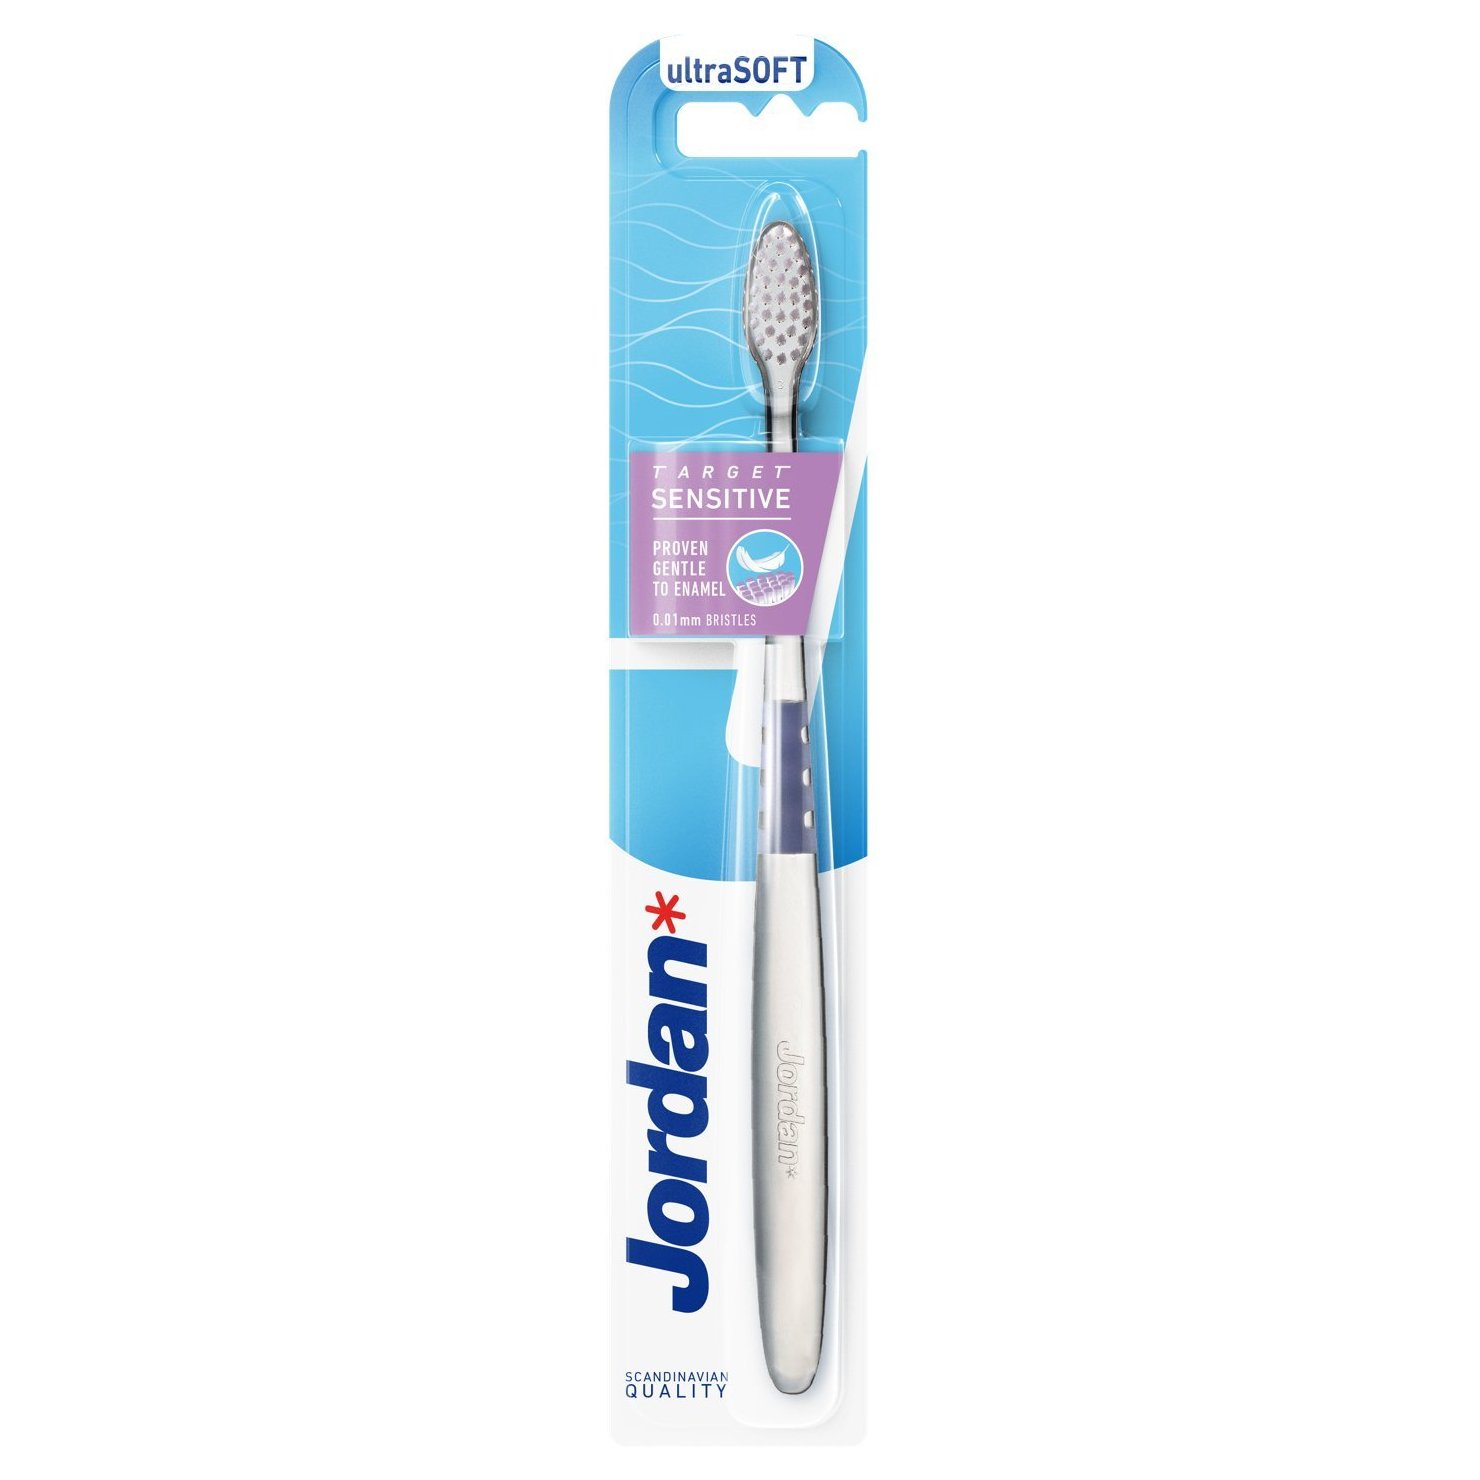 Jordan Target Sensitive Toothebrush Ultra Soft 0.01mm Πολύ Μαλακή Οδοντόβουρτσα για Βαθύ Καθαρισμό με Εξαιρετικά Λεπτές Ίνες 1 Τεμάχιο – Άσπρο